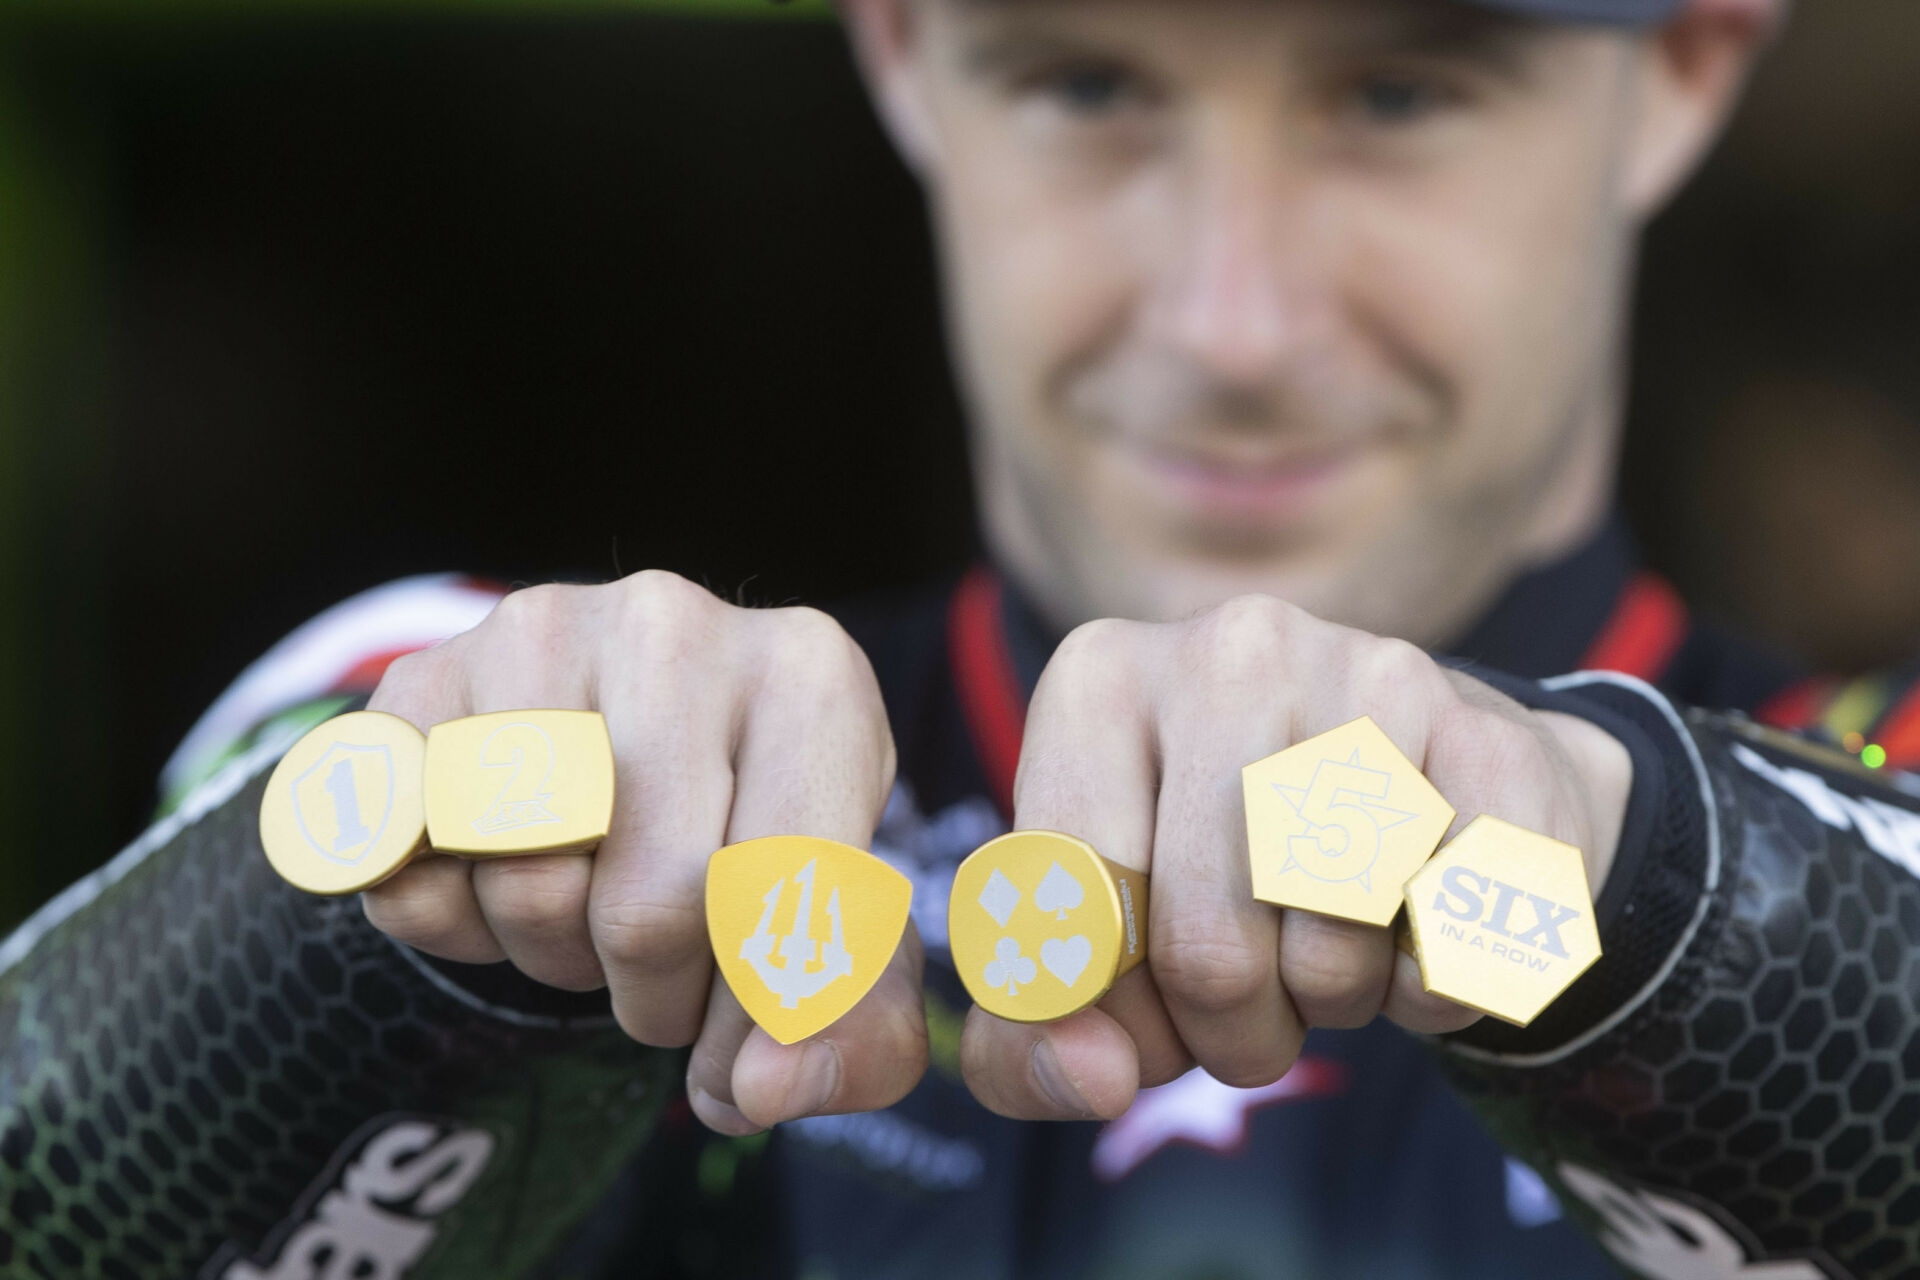 Six-time Superbike World Champion Jonathan Rea. Photo courtesy Pirelli.